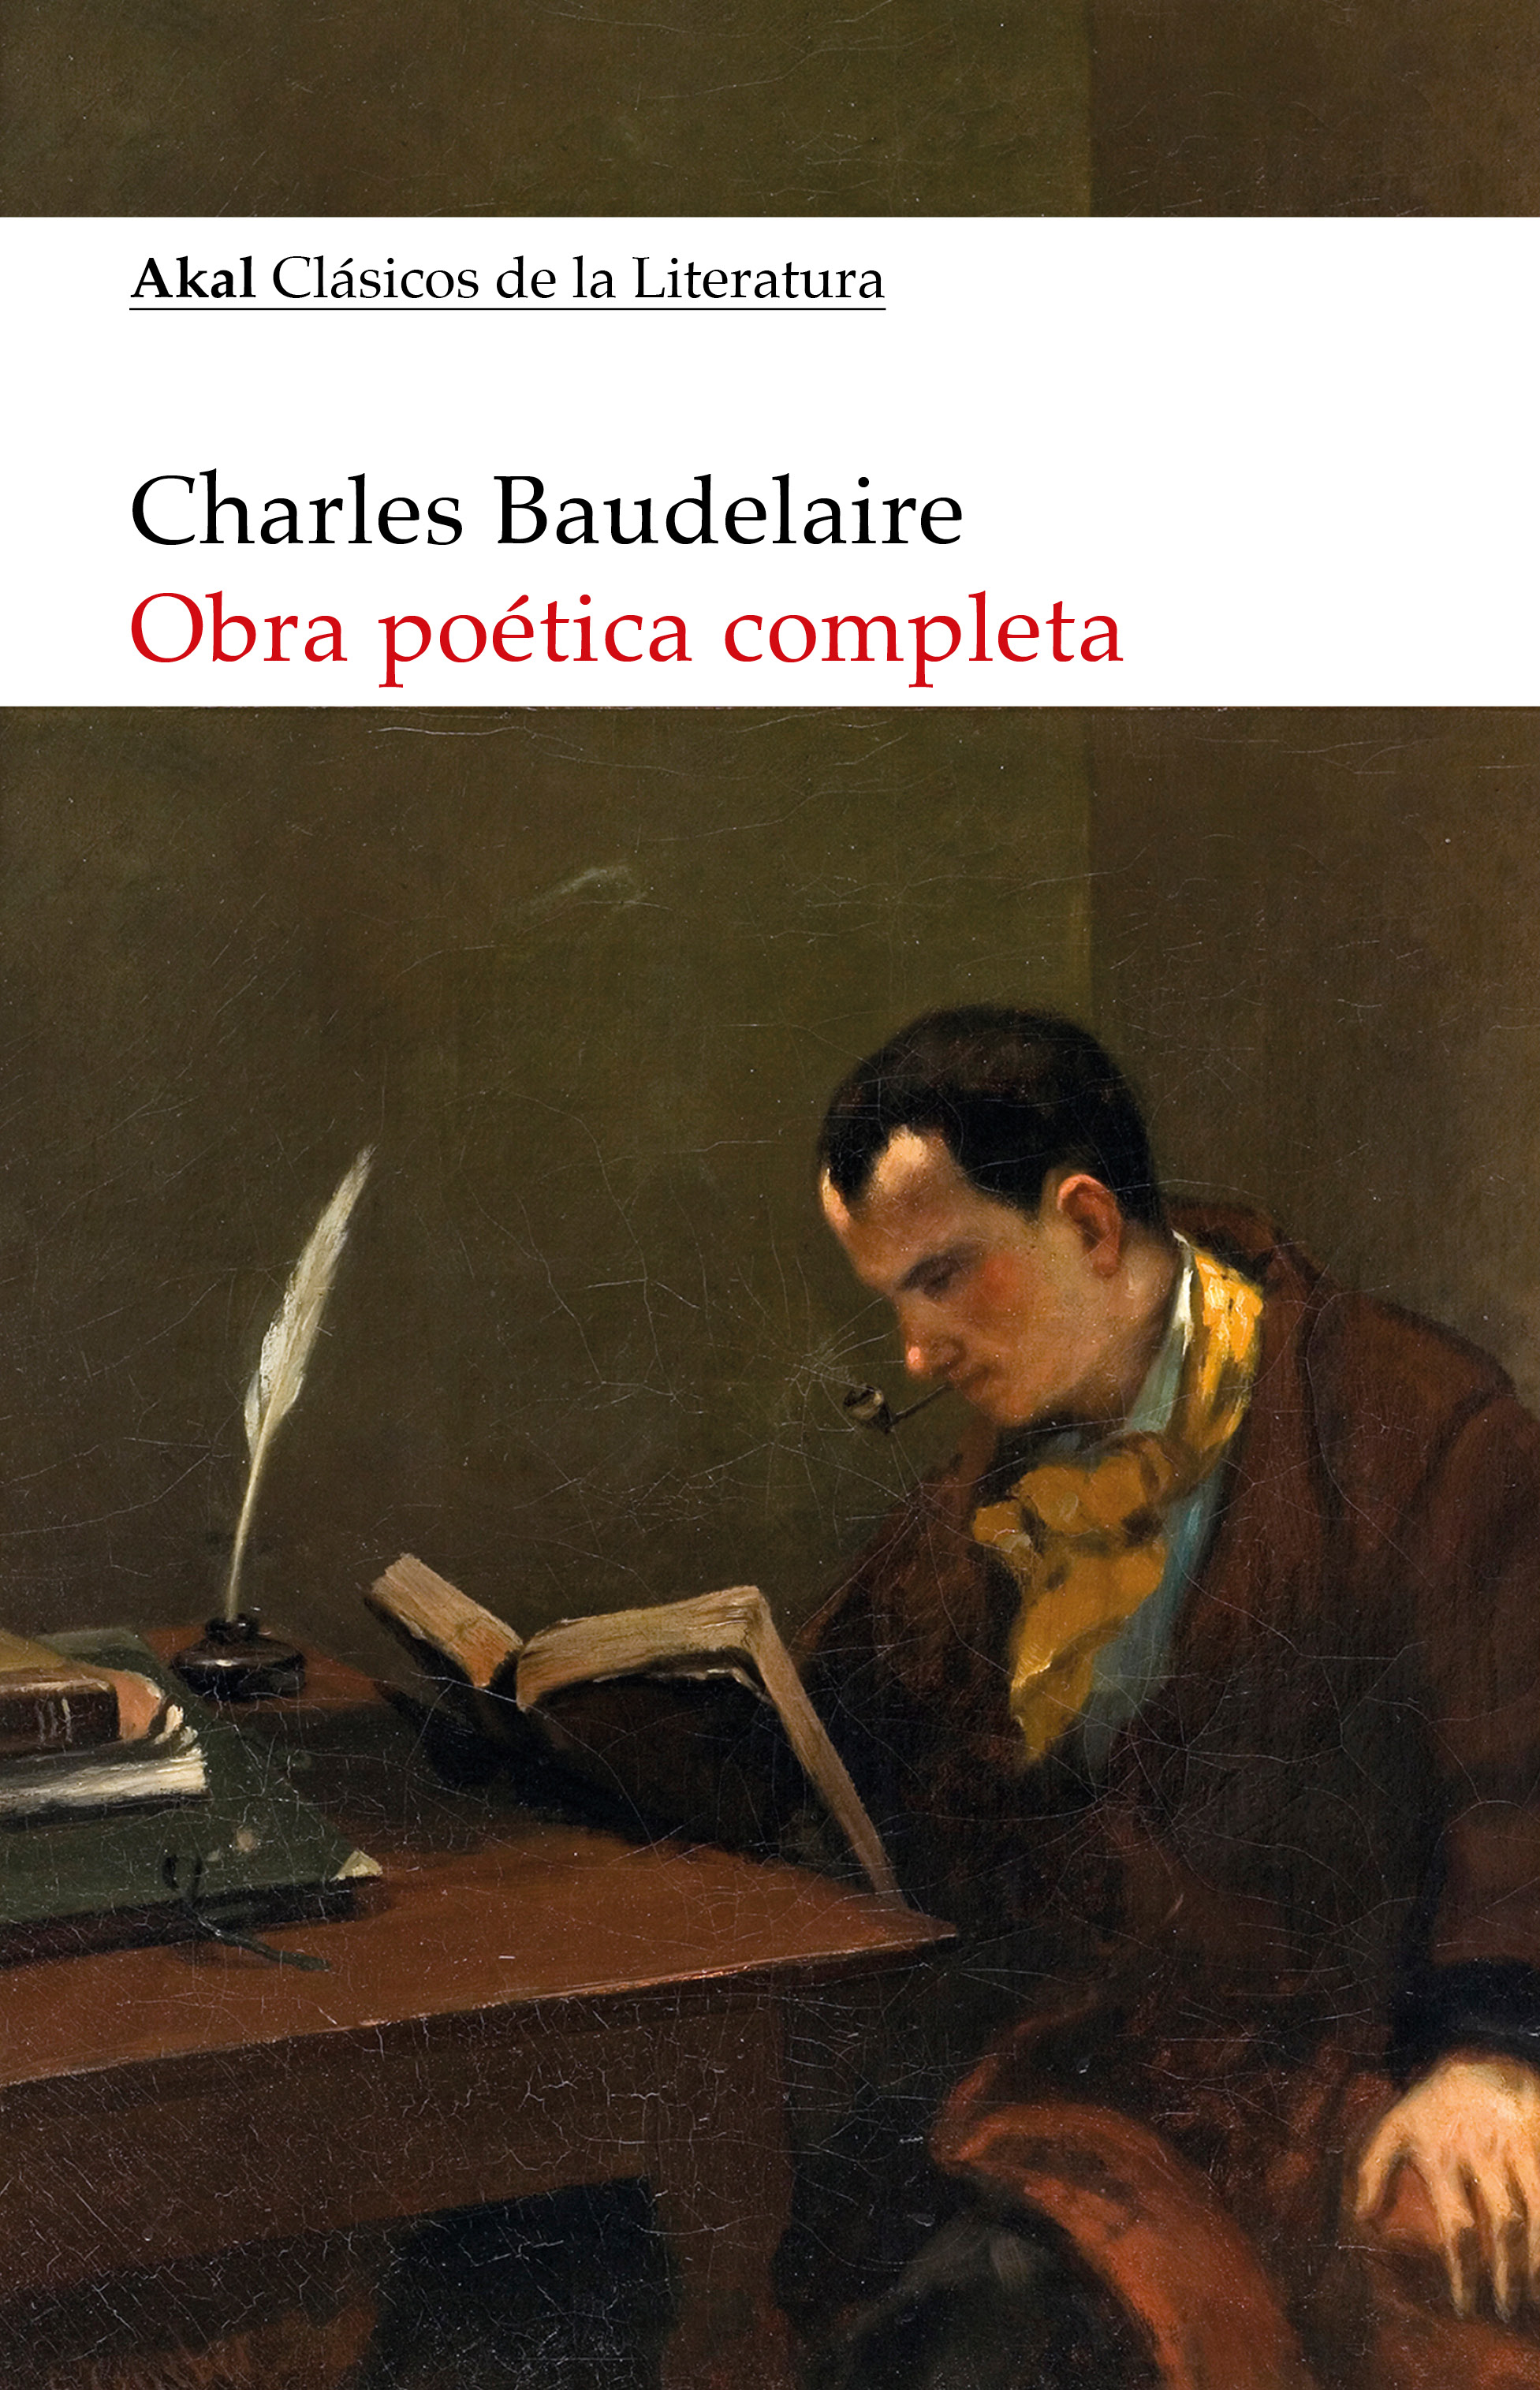 OBRA POÉTICA COMPLETA (Baudelaire) - Charles Baudelaire